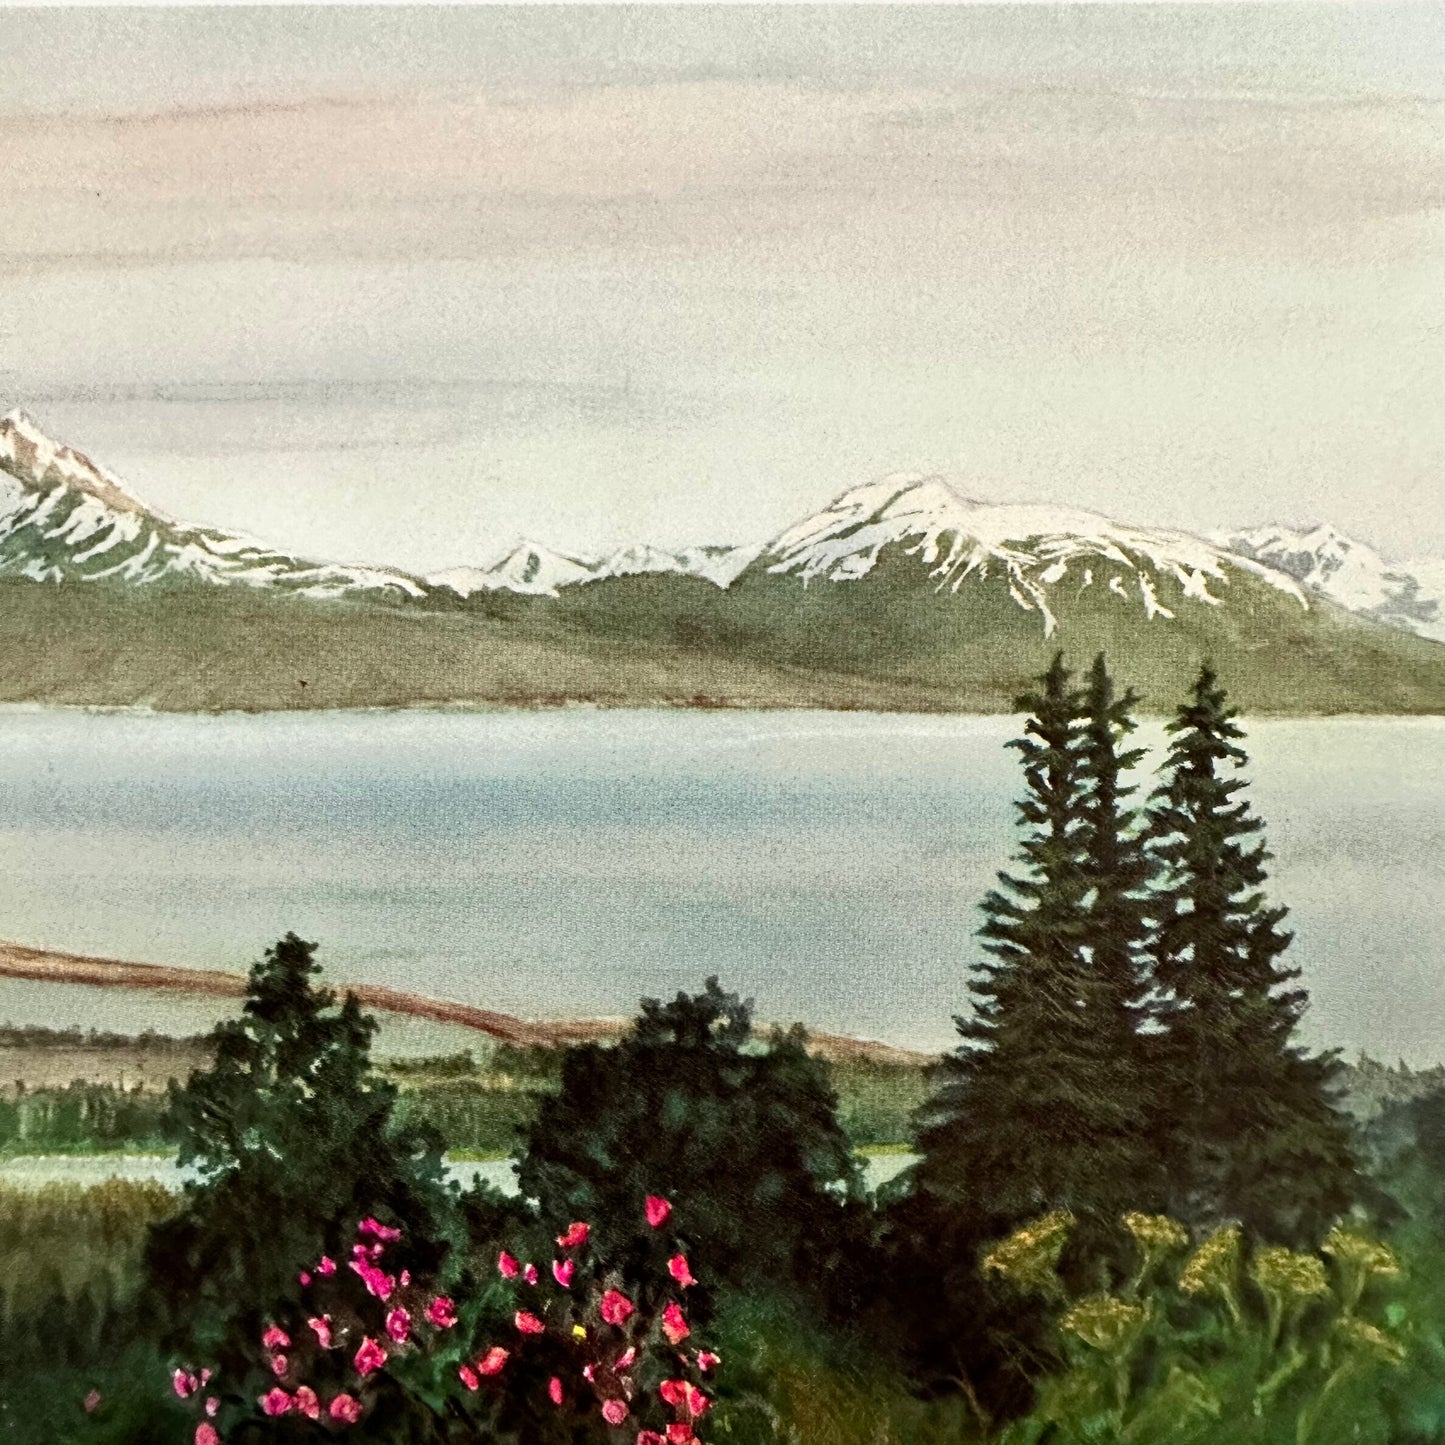 "Homer Spit Katchemak Bay Summer View" Water Color Painting 4x8" Art Print